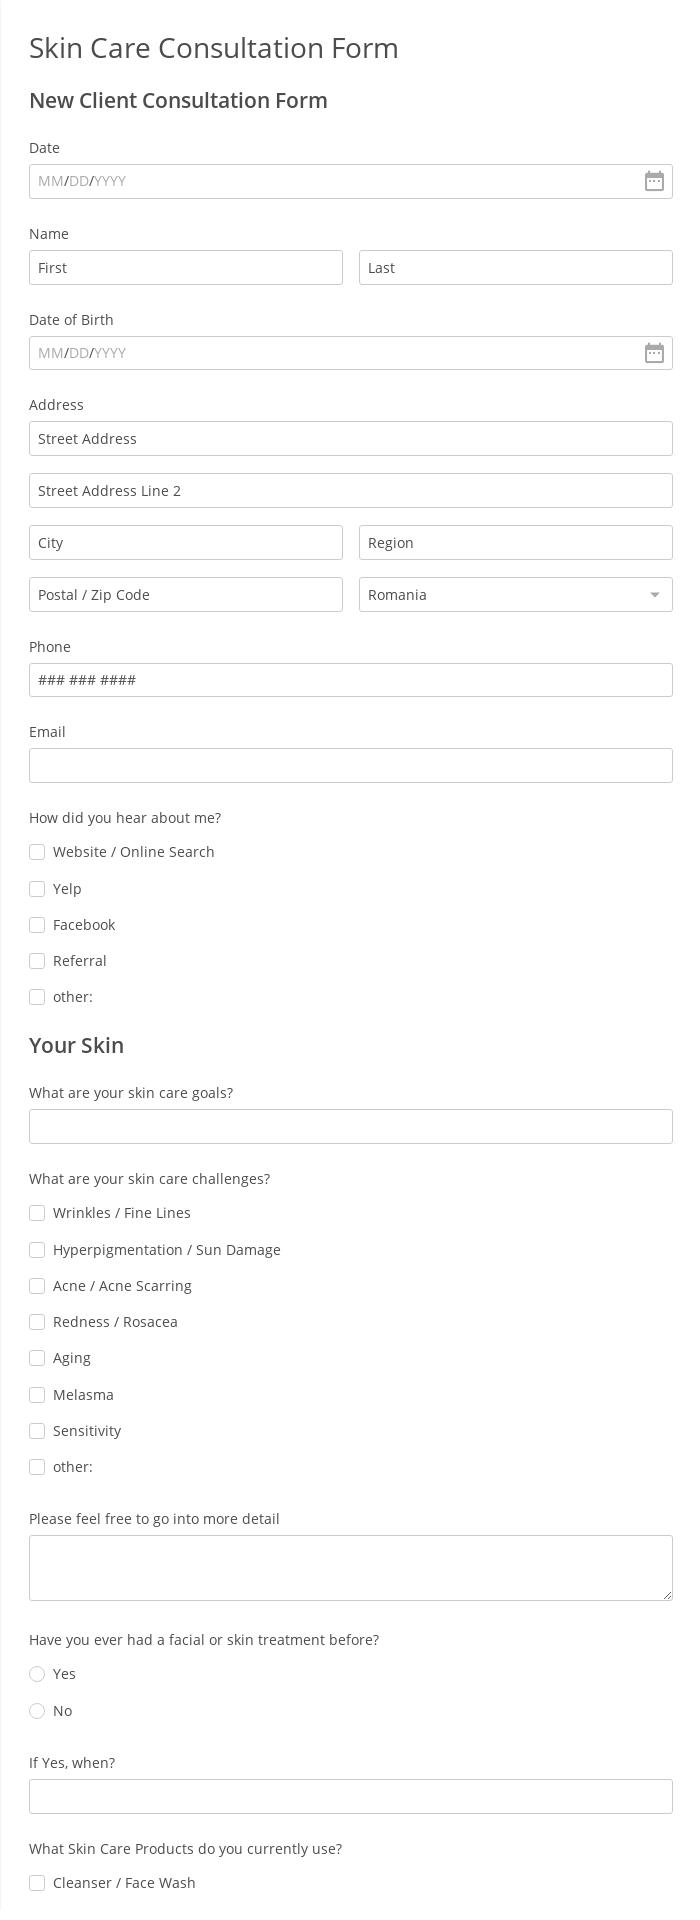 Skin Care Consultation Form